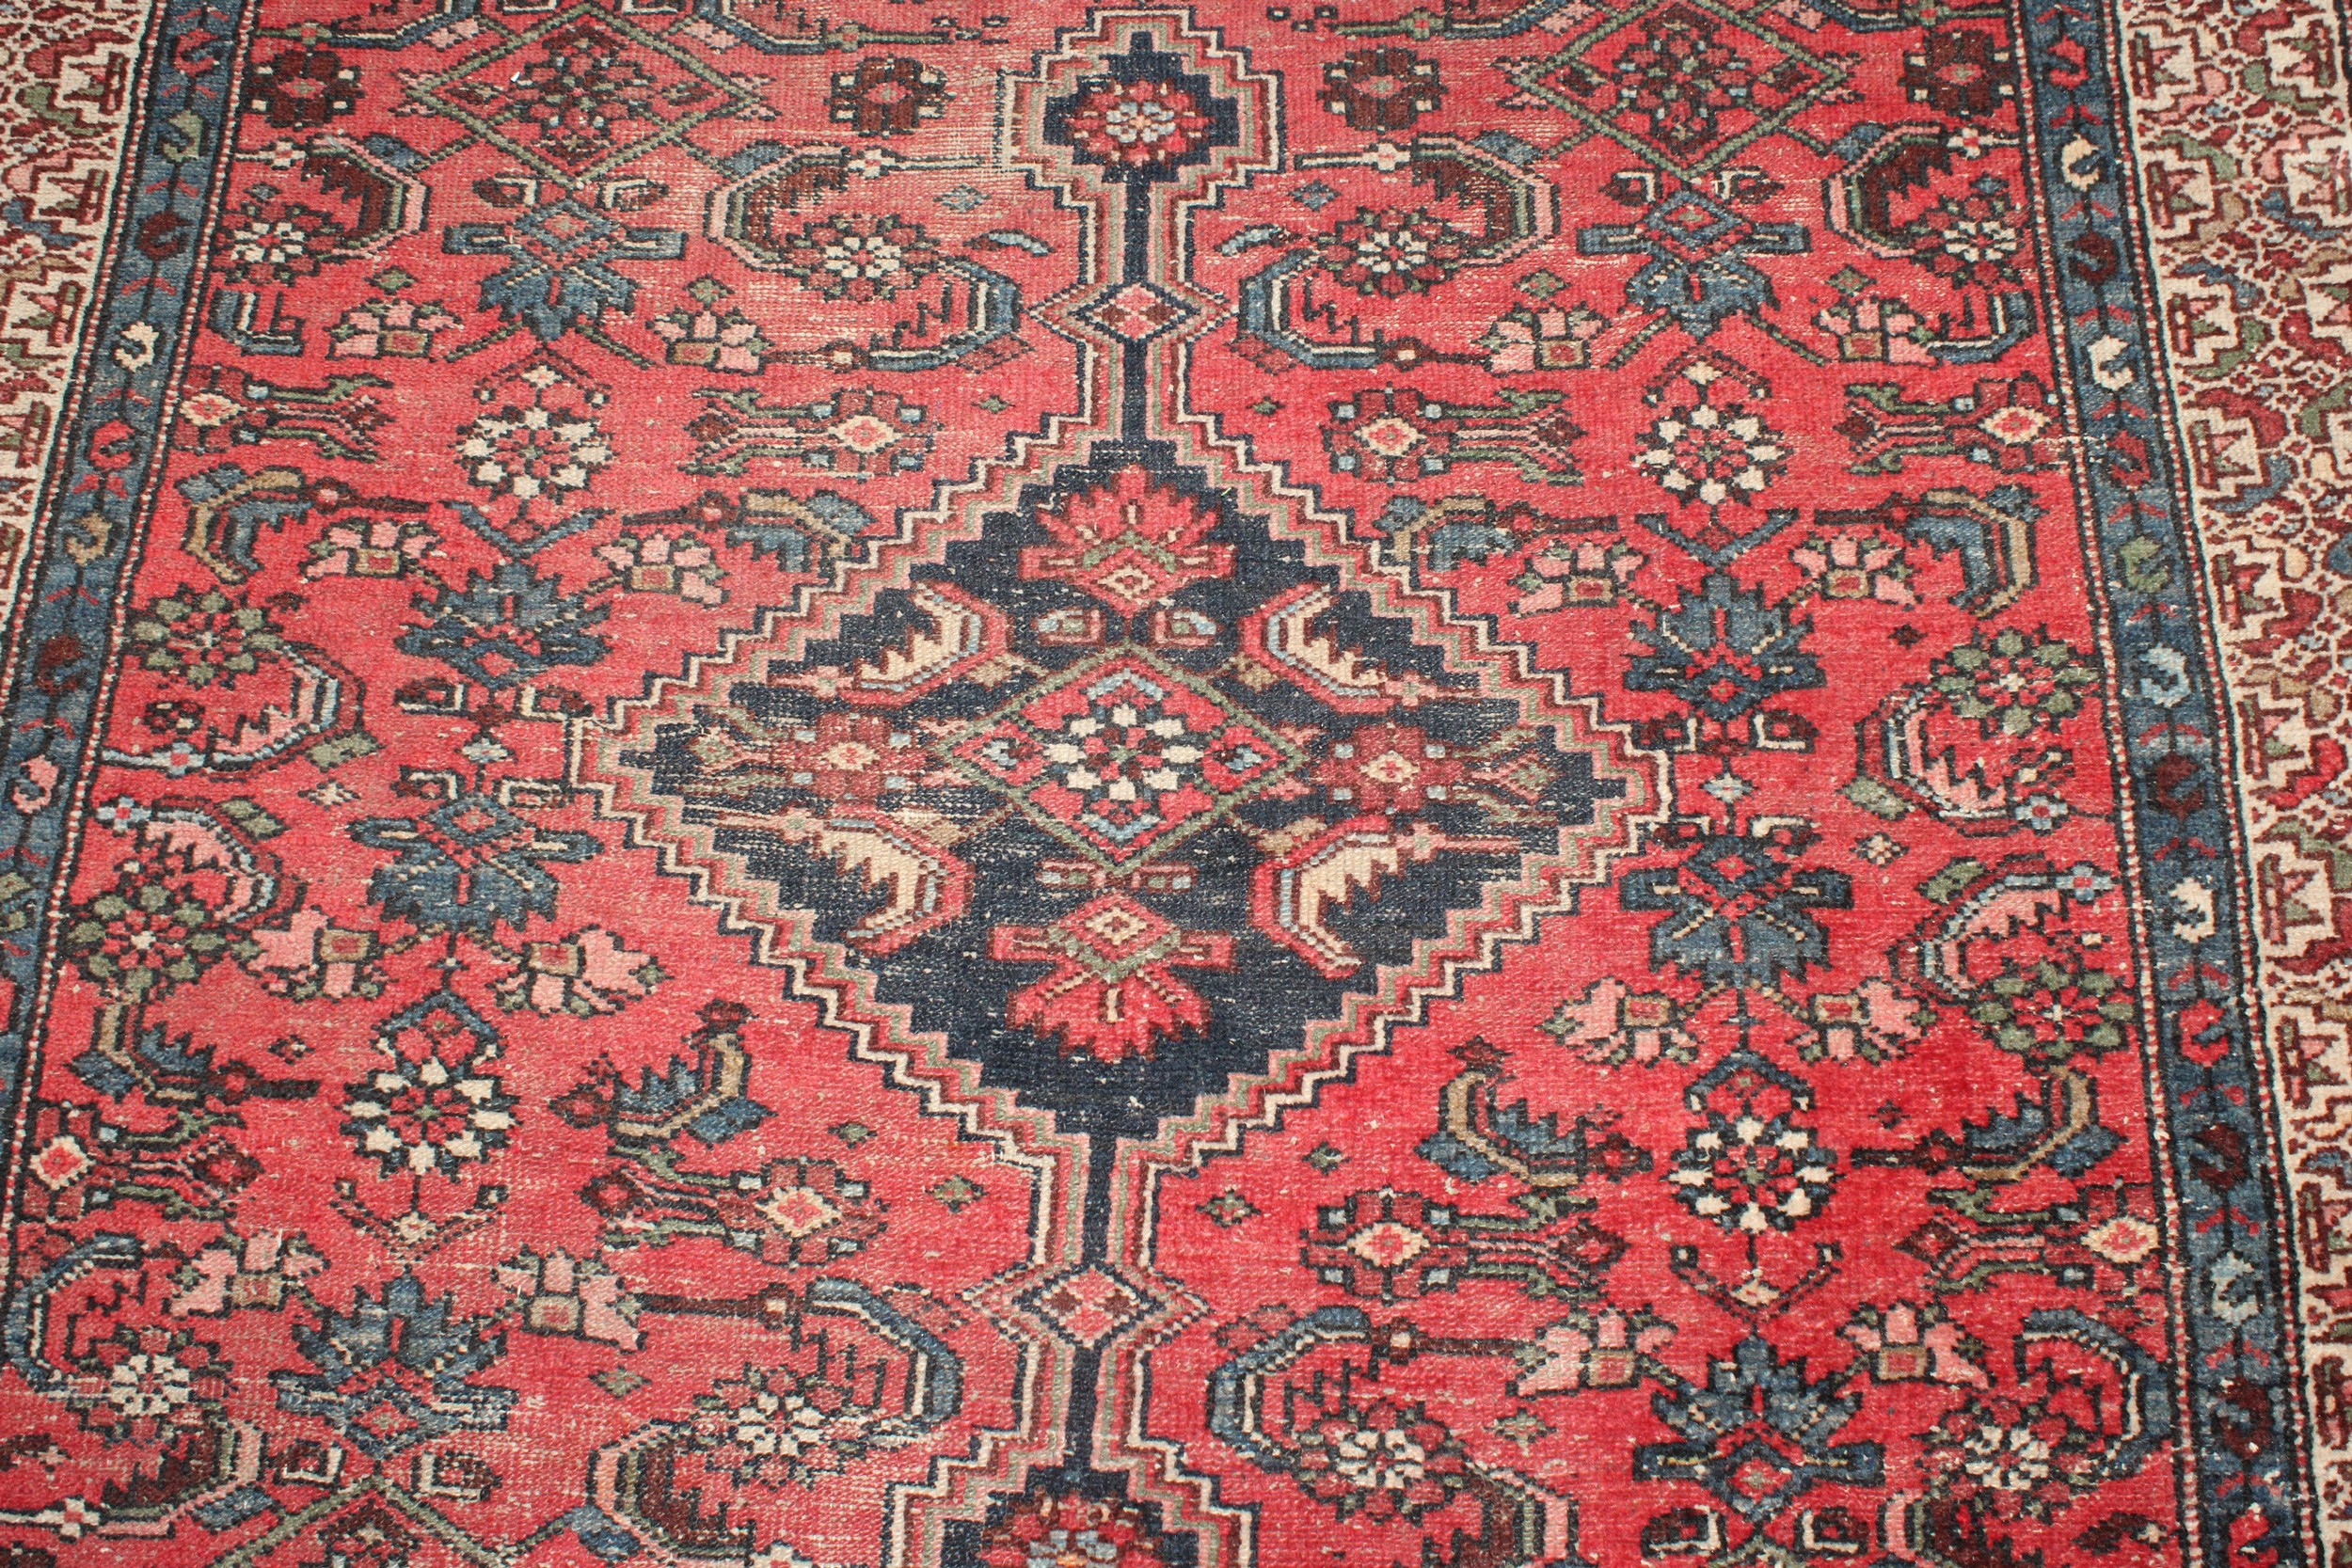 An Iranian Hamadan type wool rug or carpet, 198cm x 143cm - Image 3 of 4